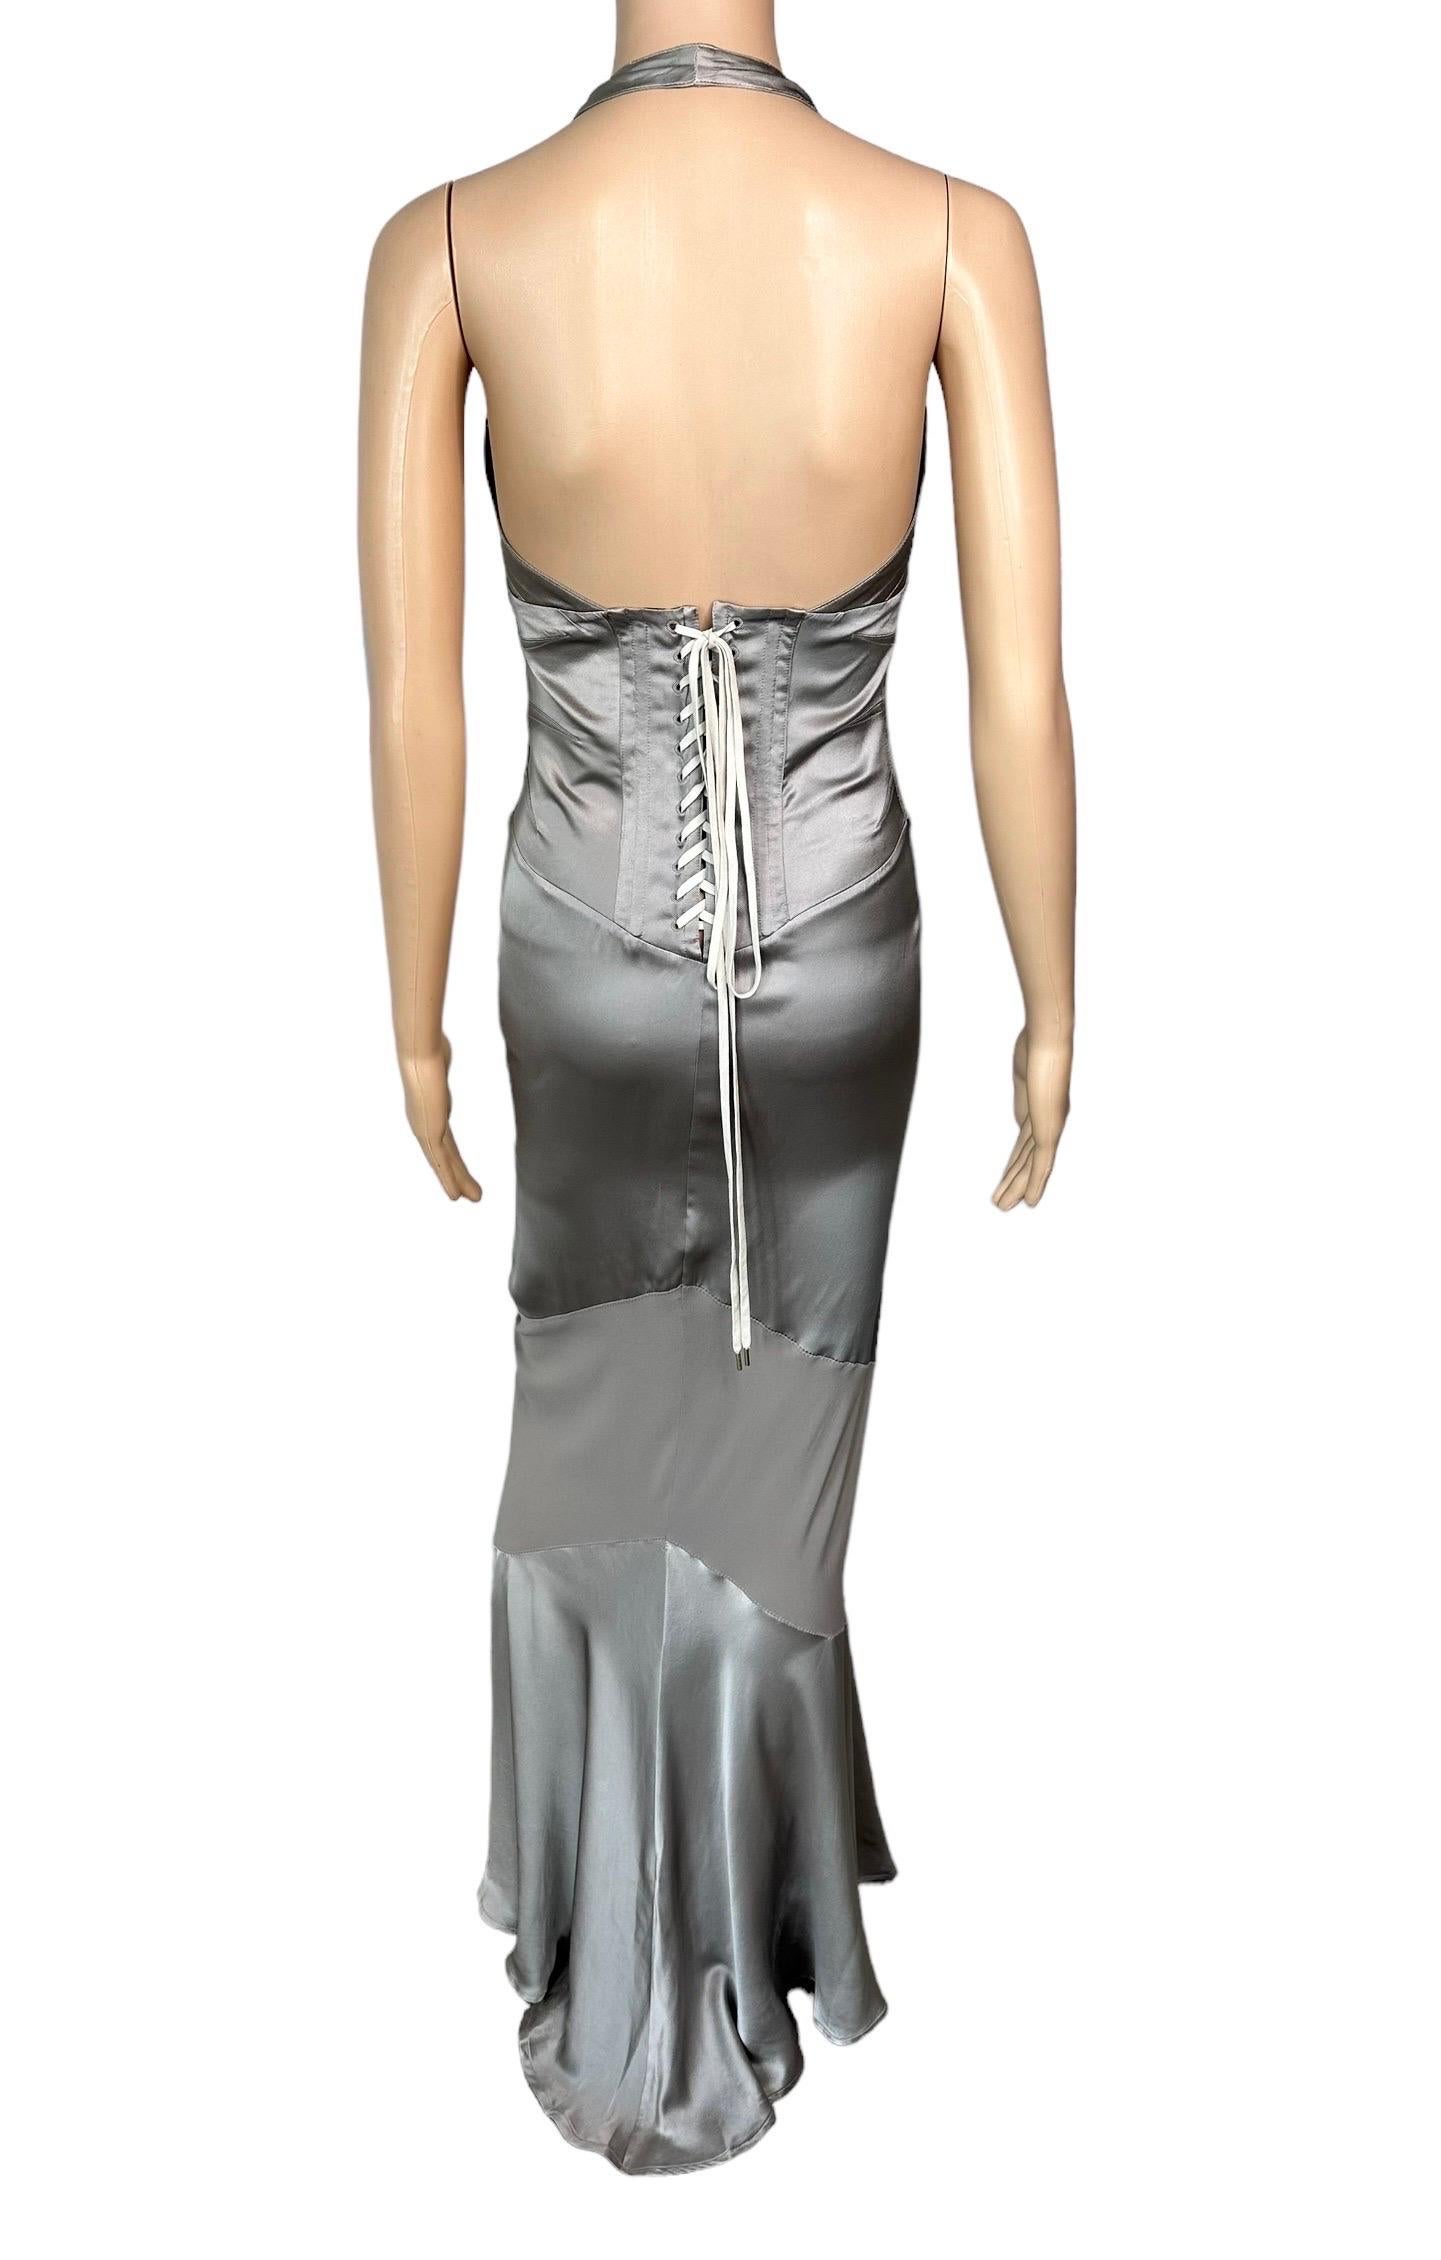 Roberto Cavalli S/S 2003 Corset Plunged Décolleté Silver Evening Dress Gown  For Sale 3